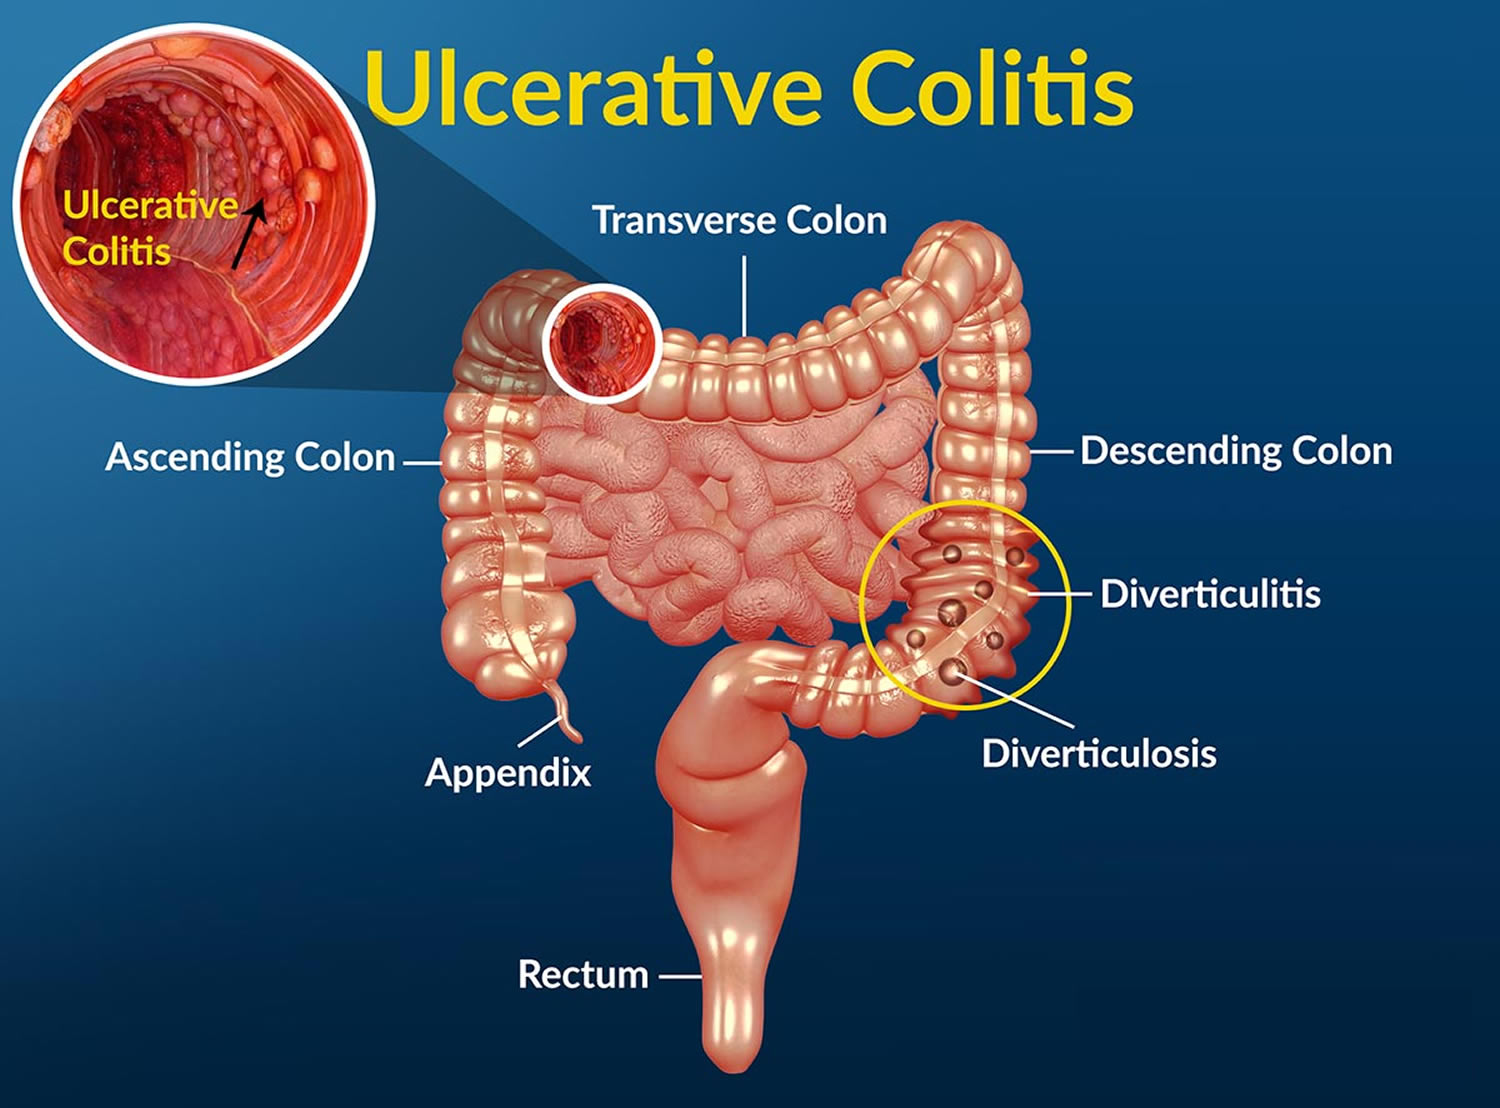 symptoms of colitis